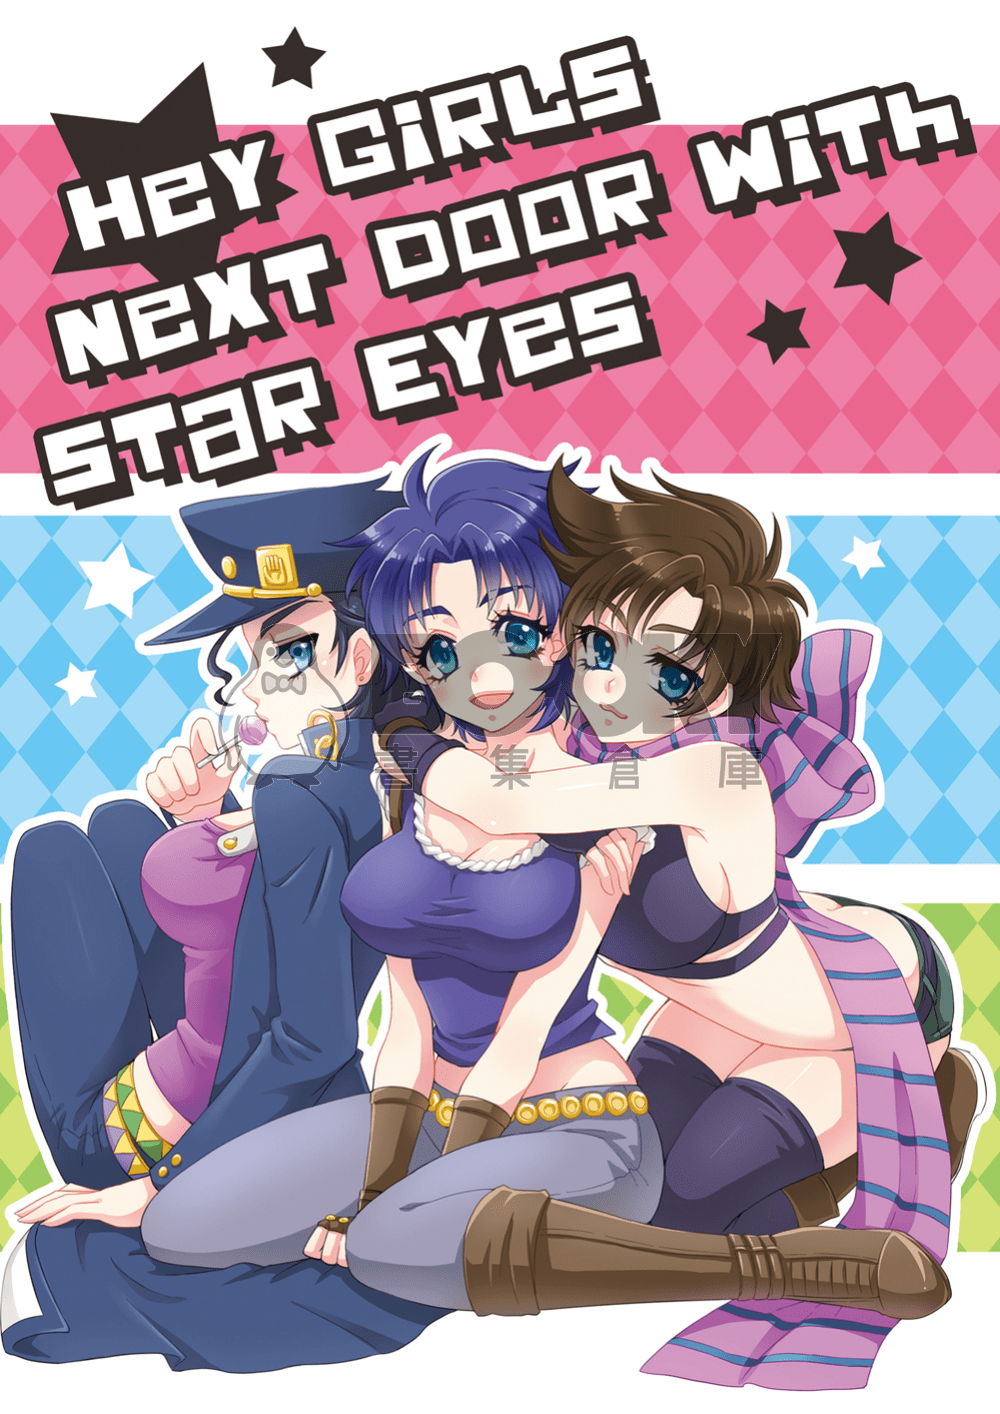 Hey girls next door with star eyes 試閱圖片